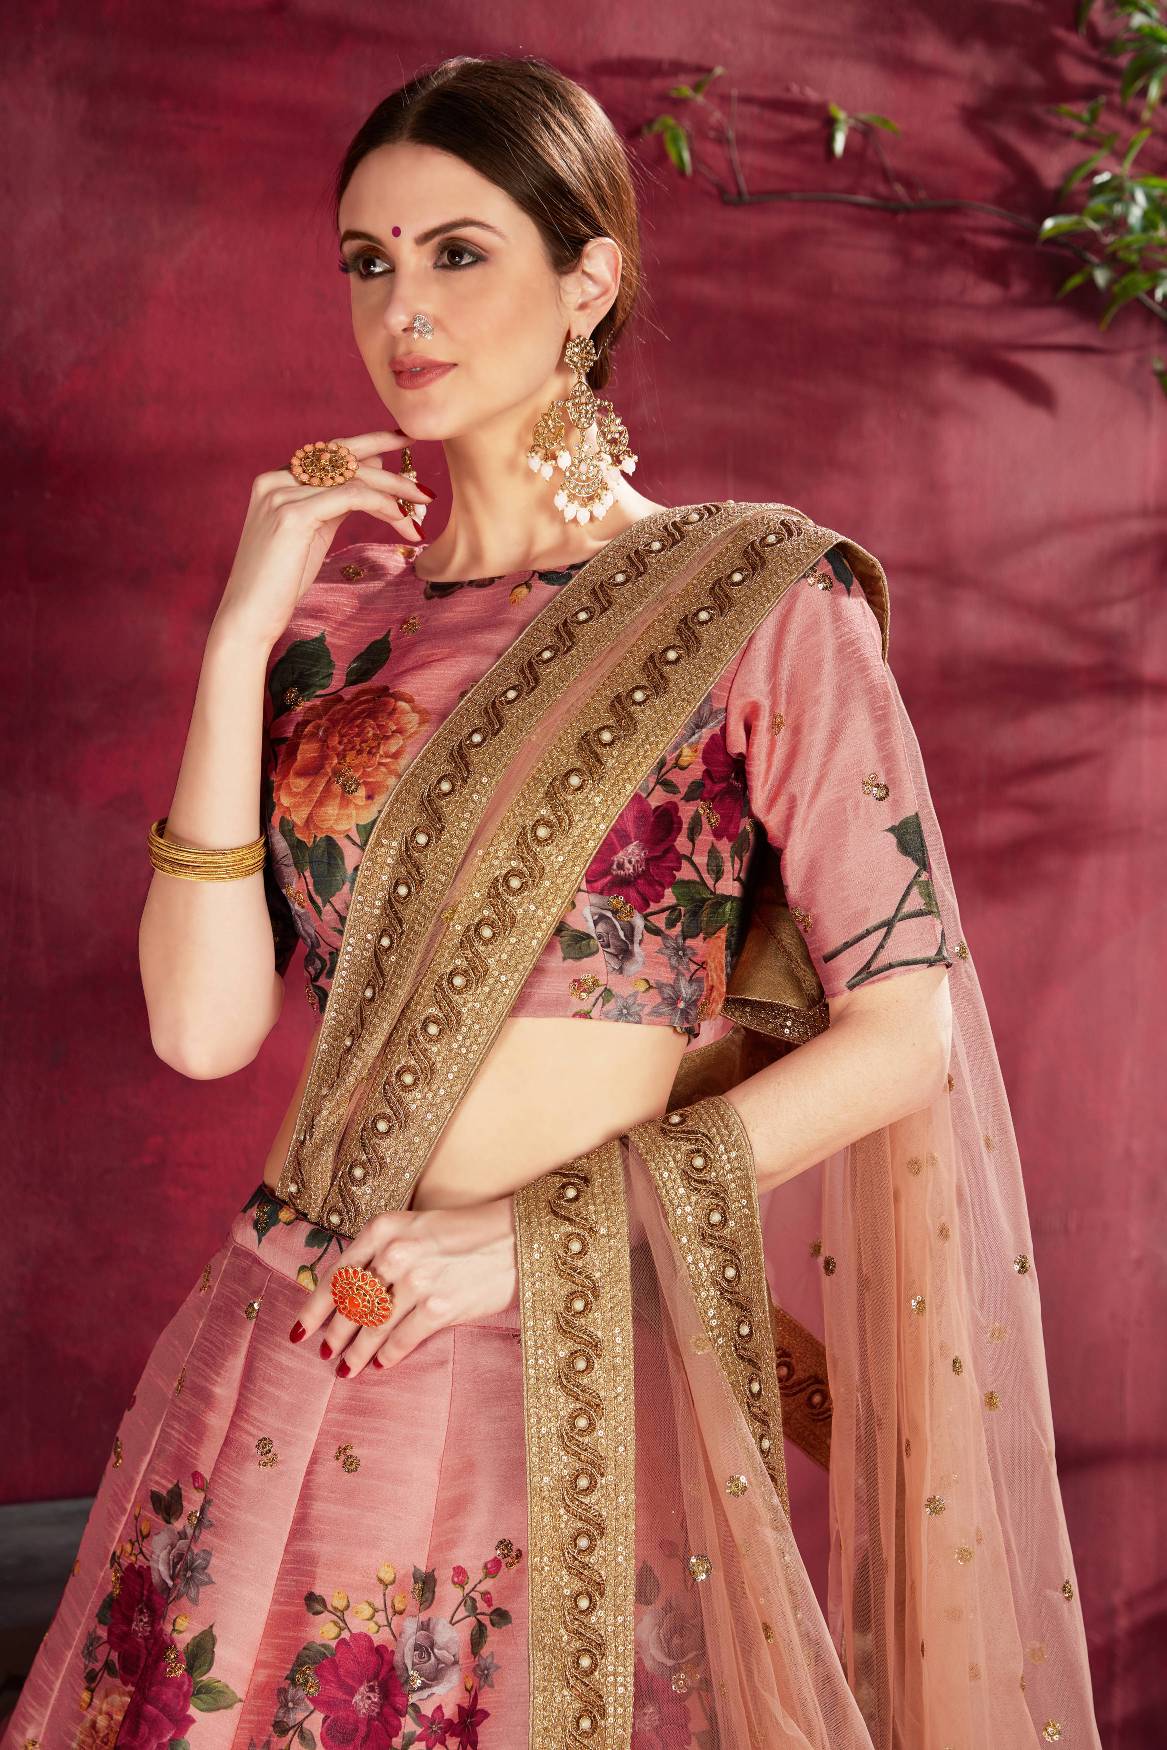 Buy Women's Bollywood Style Designer Lehenga Choli at Amazon.in